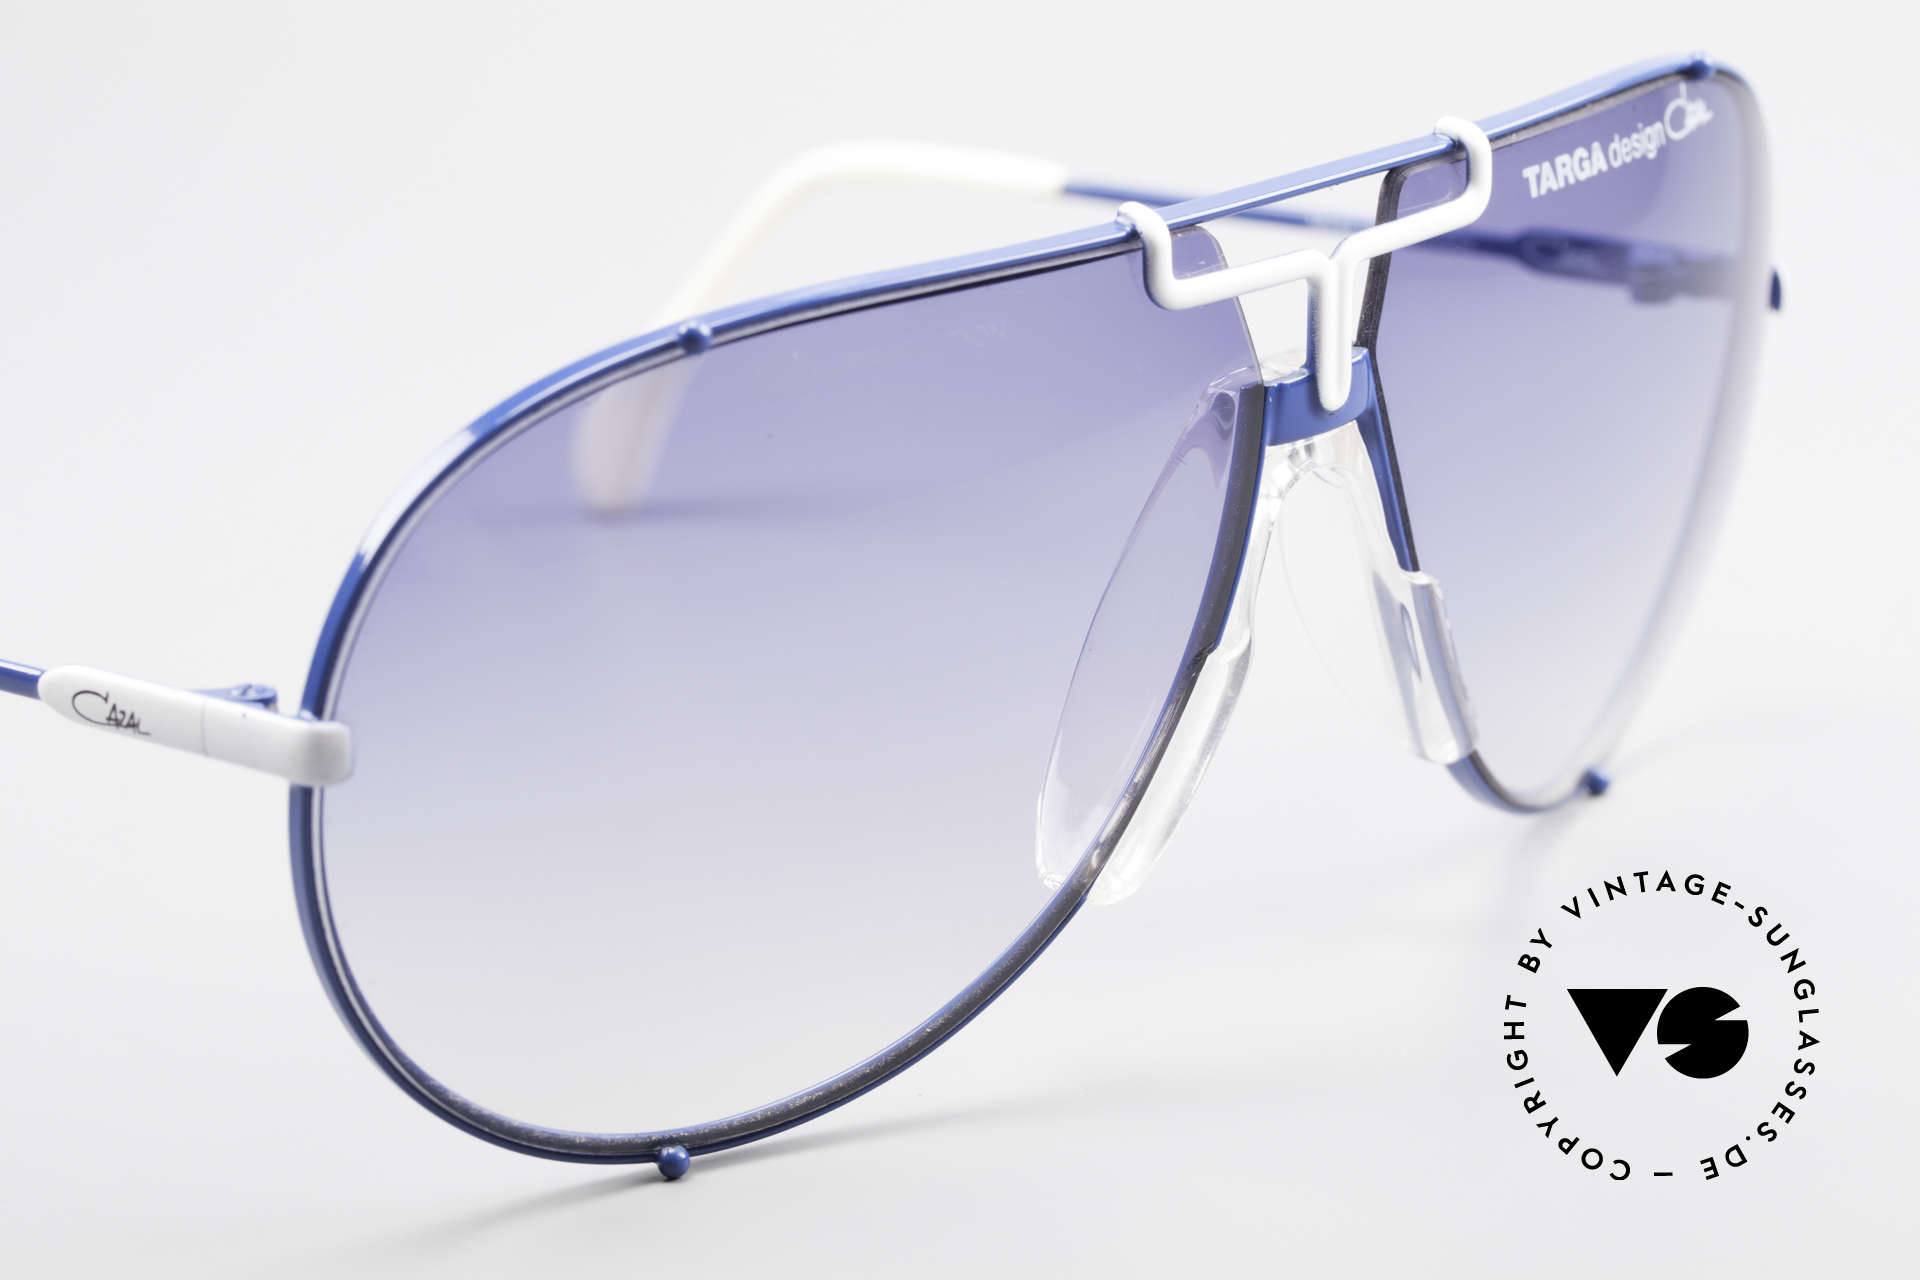 Sonnenbrillen Cazal 901 Targa Design Xl Piloten Brille West Germany Vintage Sunglasses